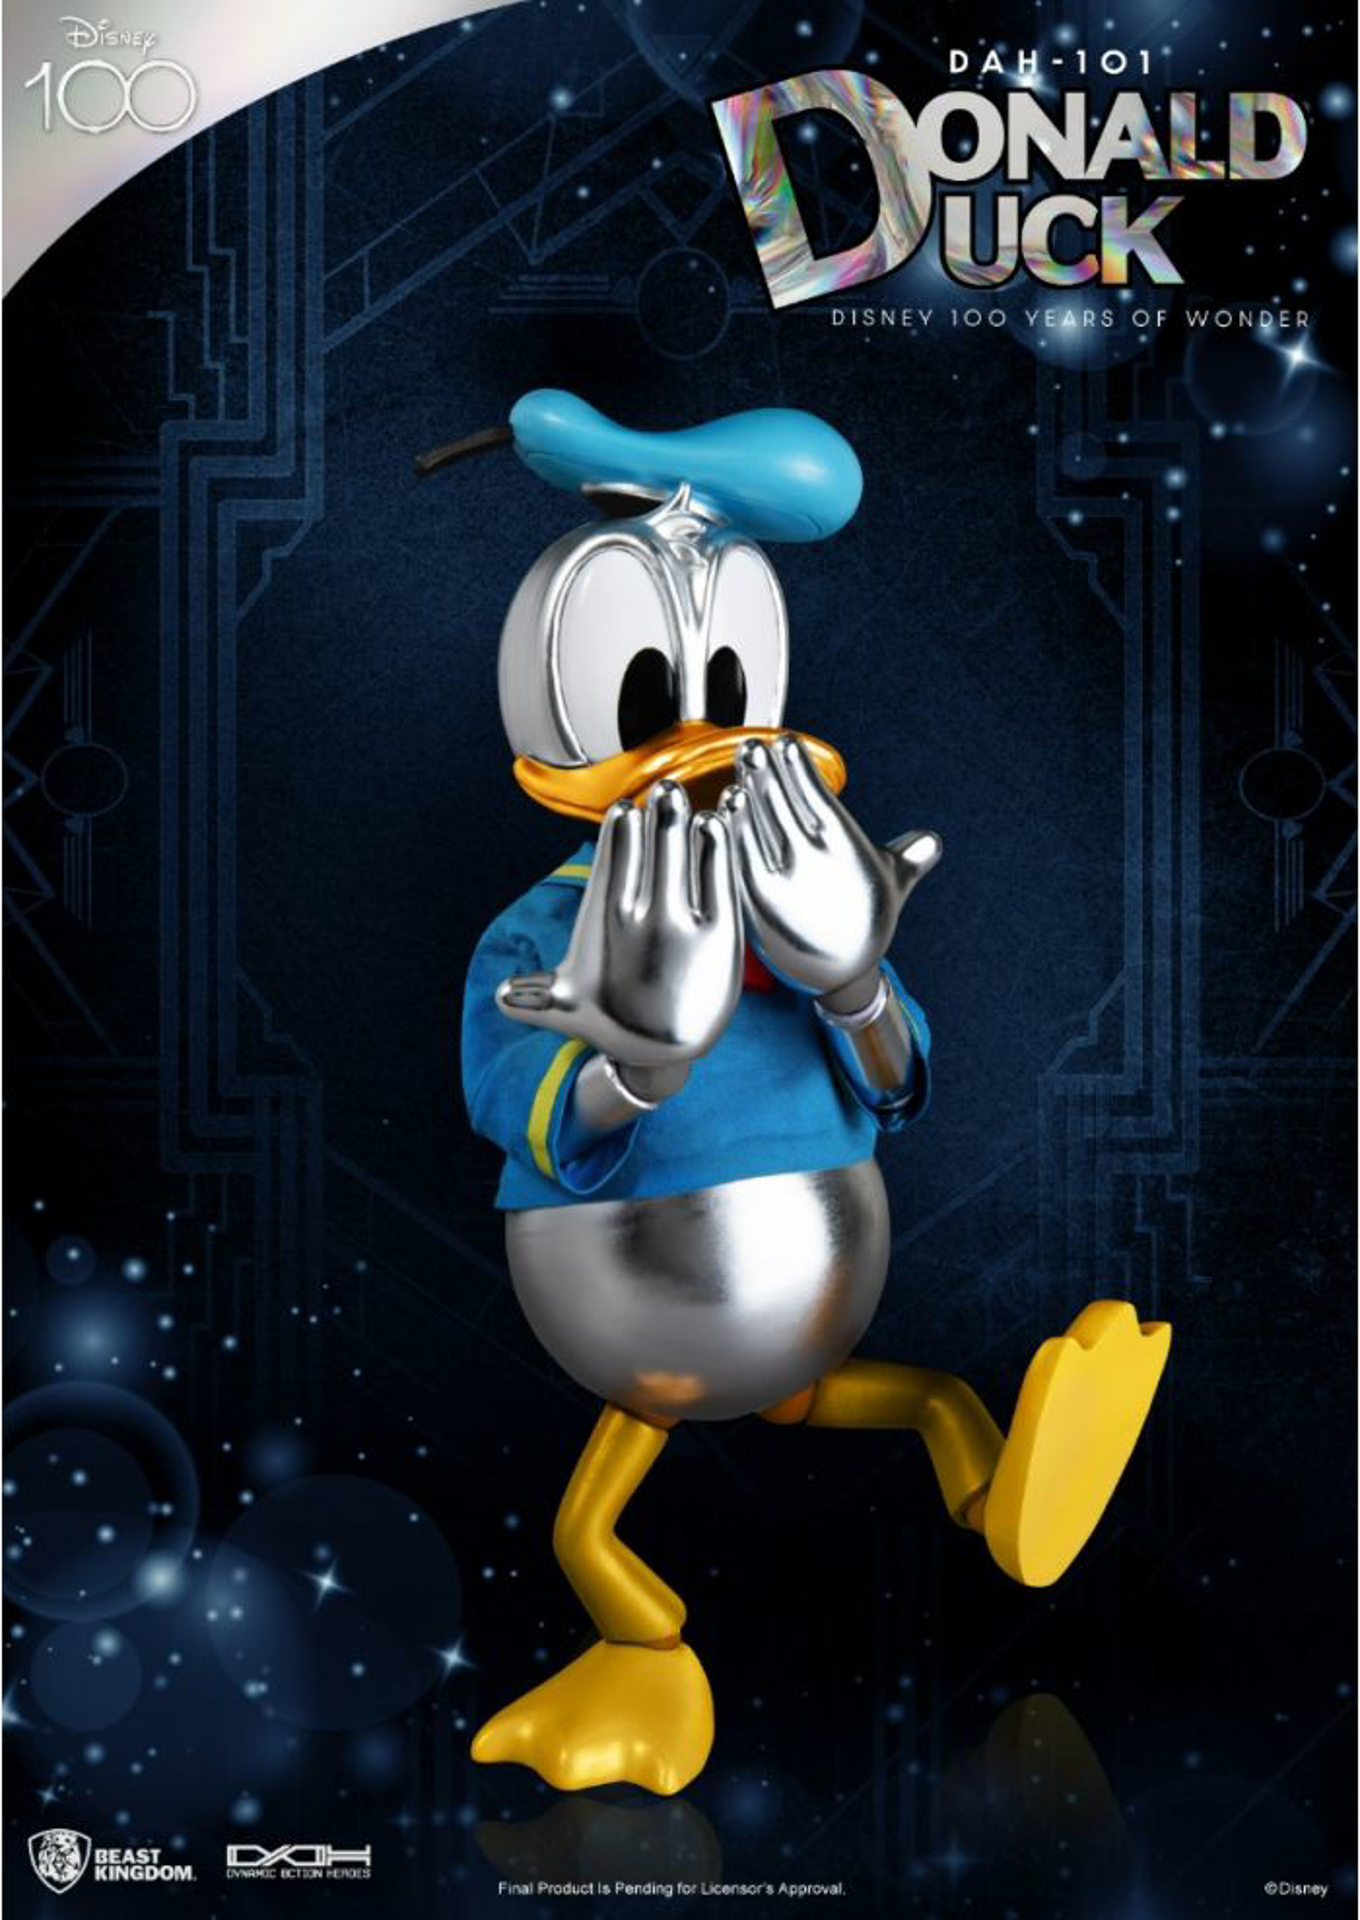 Disney - DAH-101 - Disney 100th Years of Wonder - Donald Duck